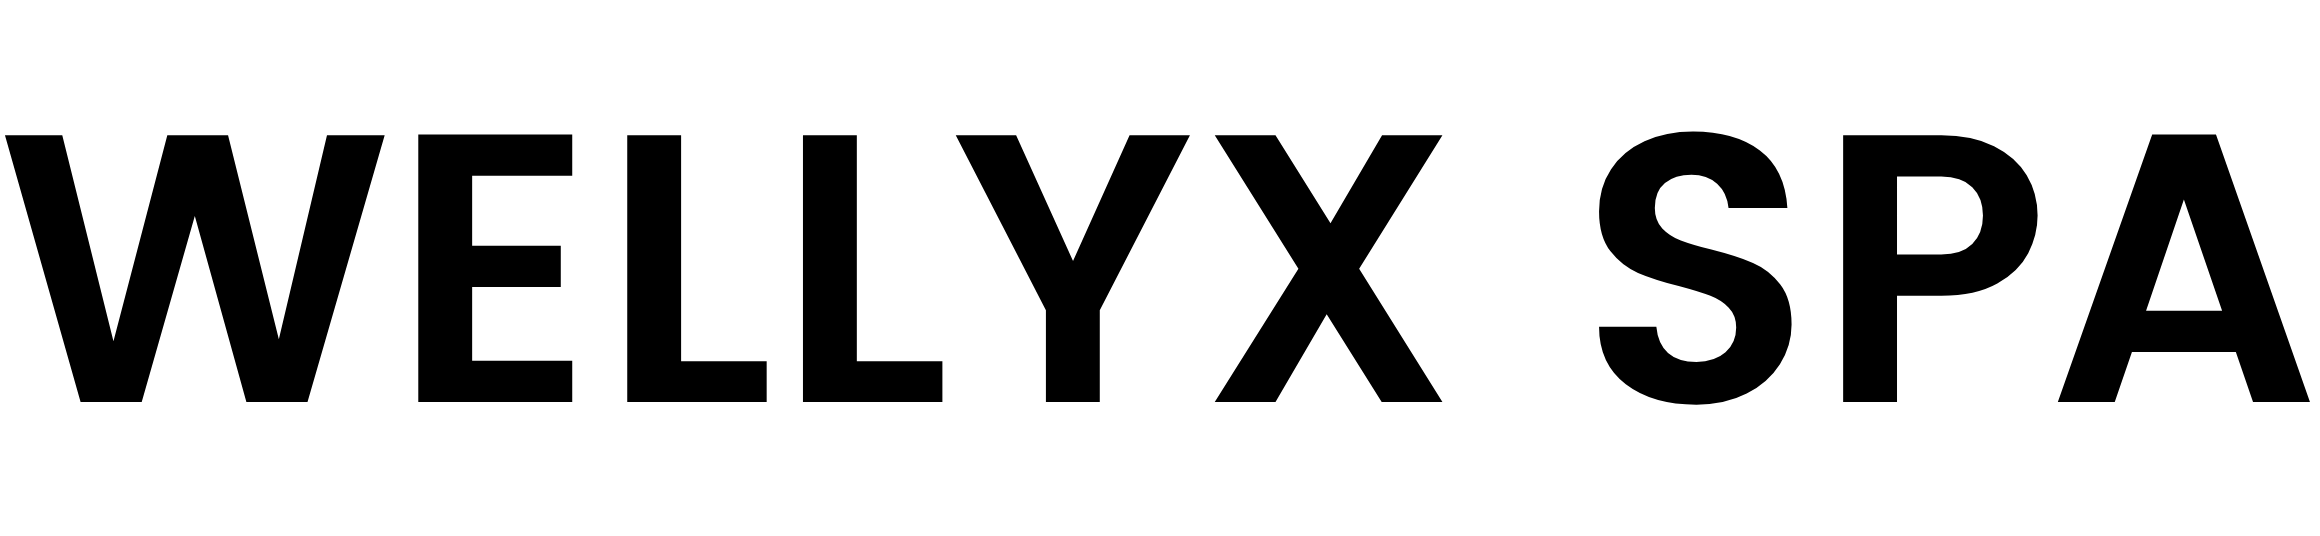 Spa  Management Software logo